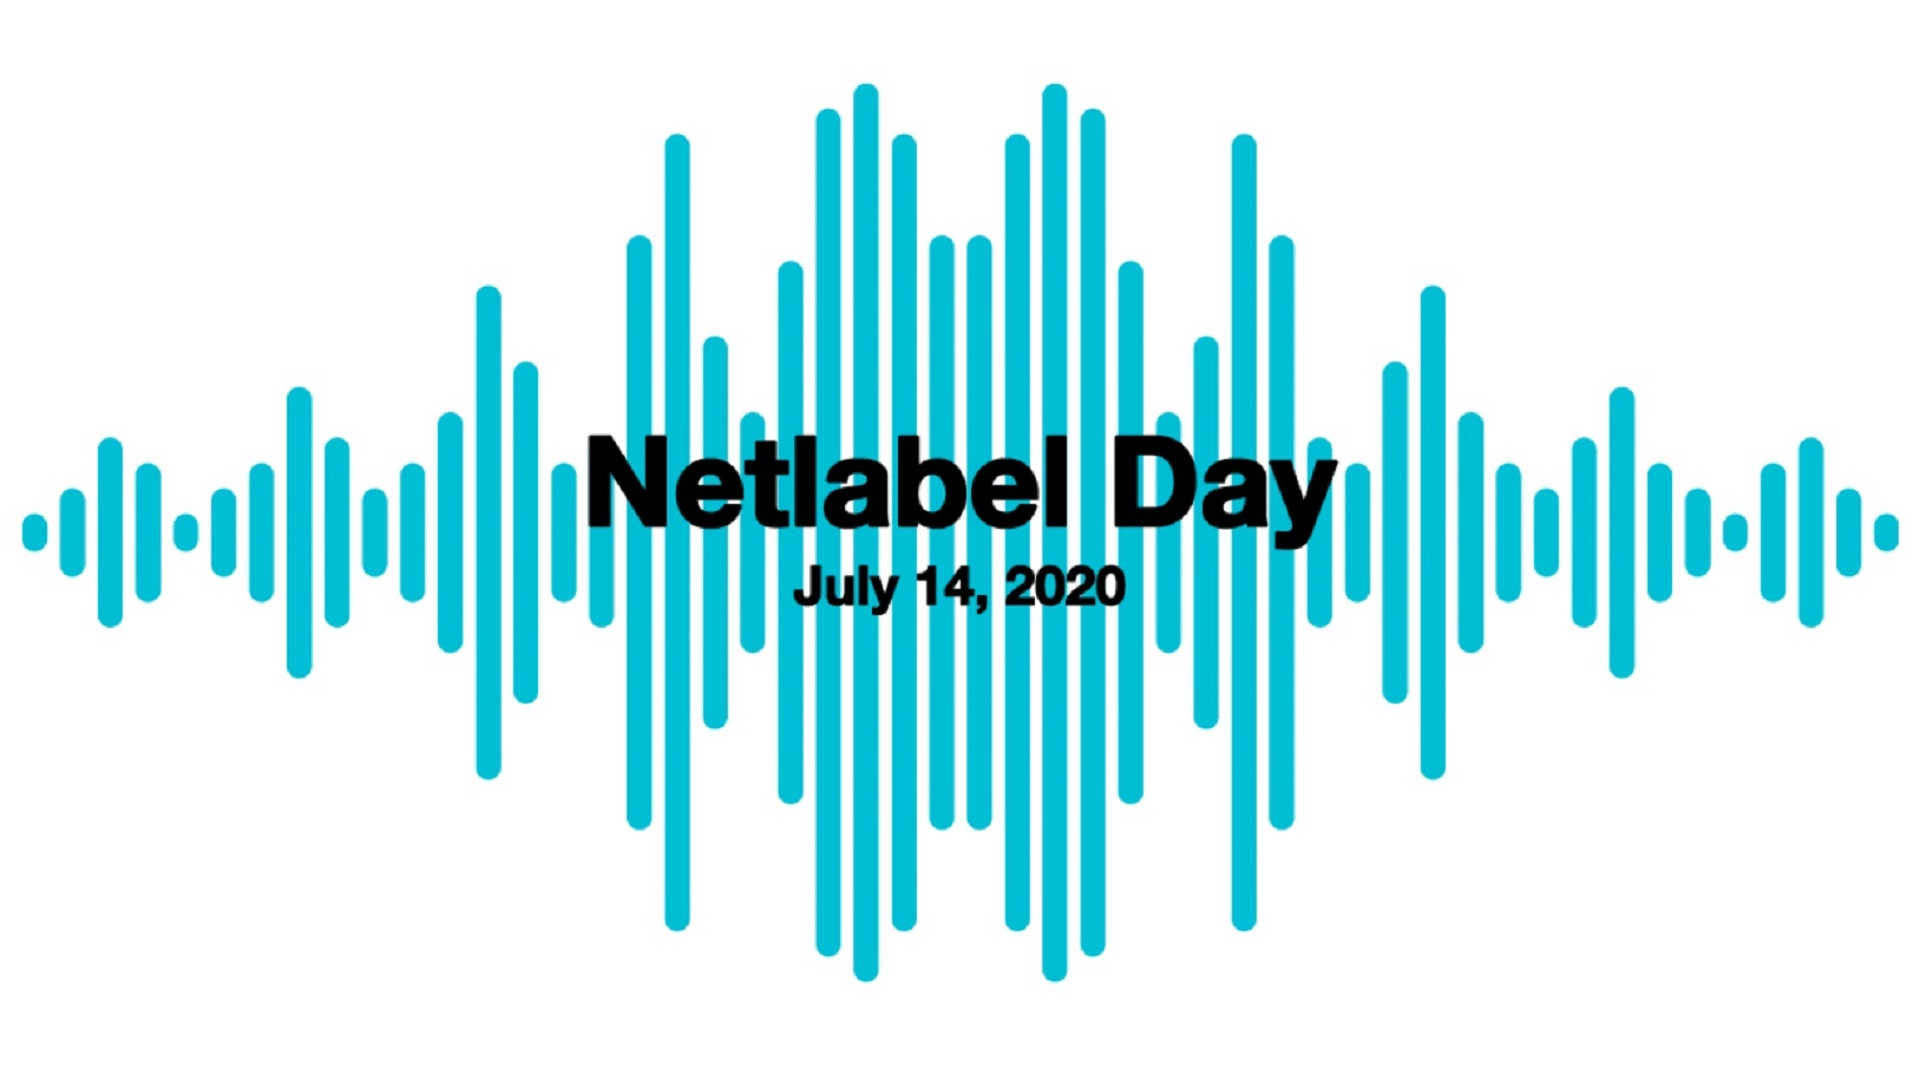 netlabel-day-2020